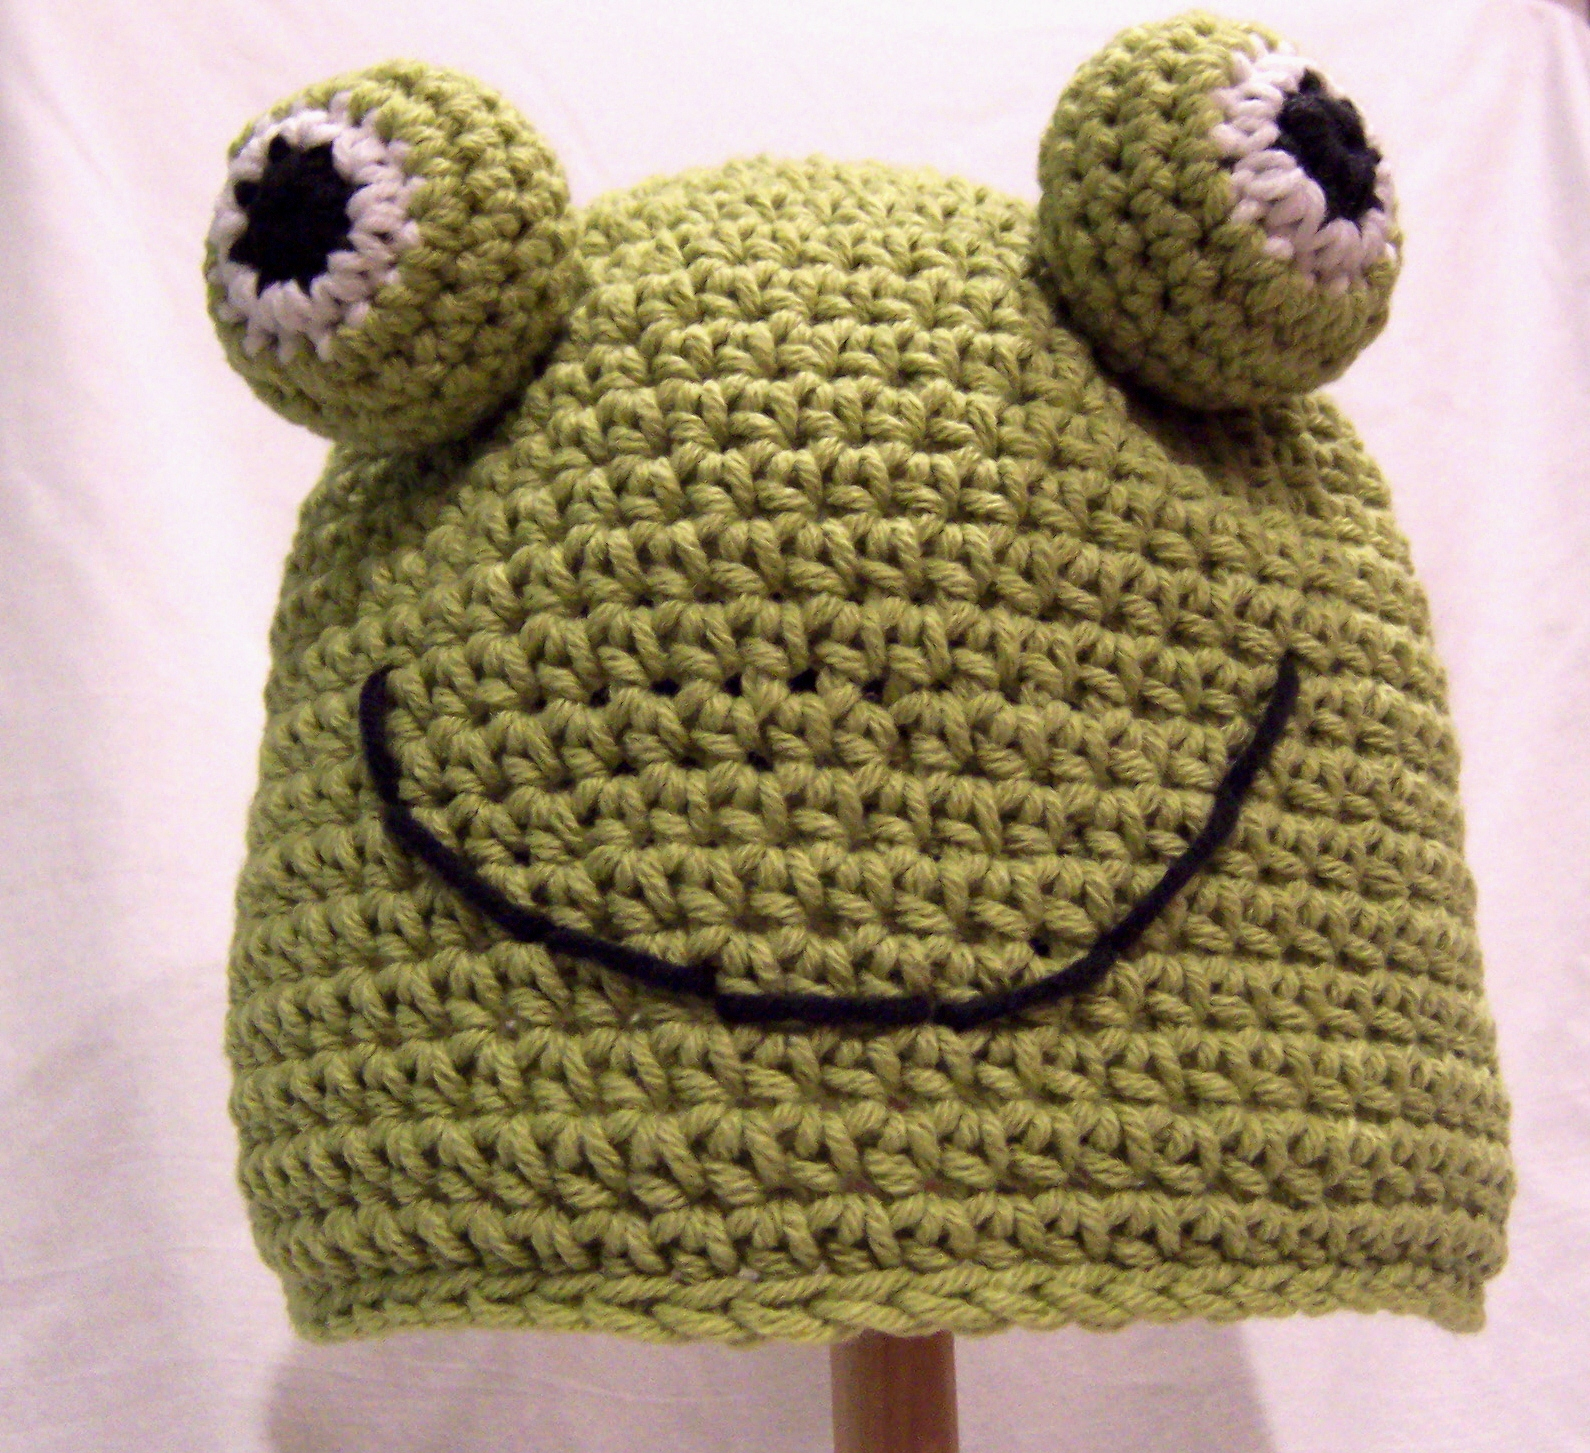 Frog Hat Knitting Pattern Free Crochet Patterns Free Crochet Pattern Crazy Frog Hat For